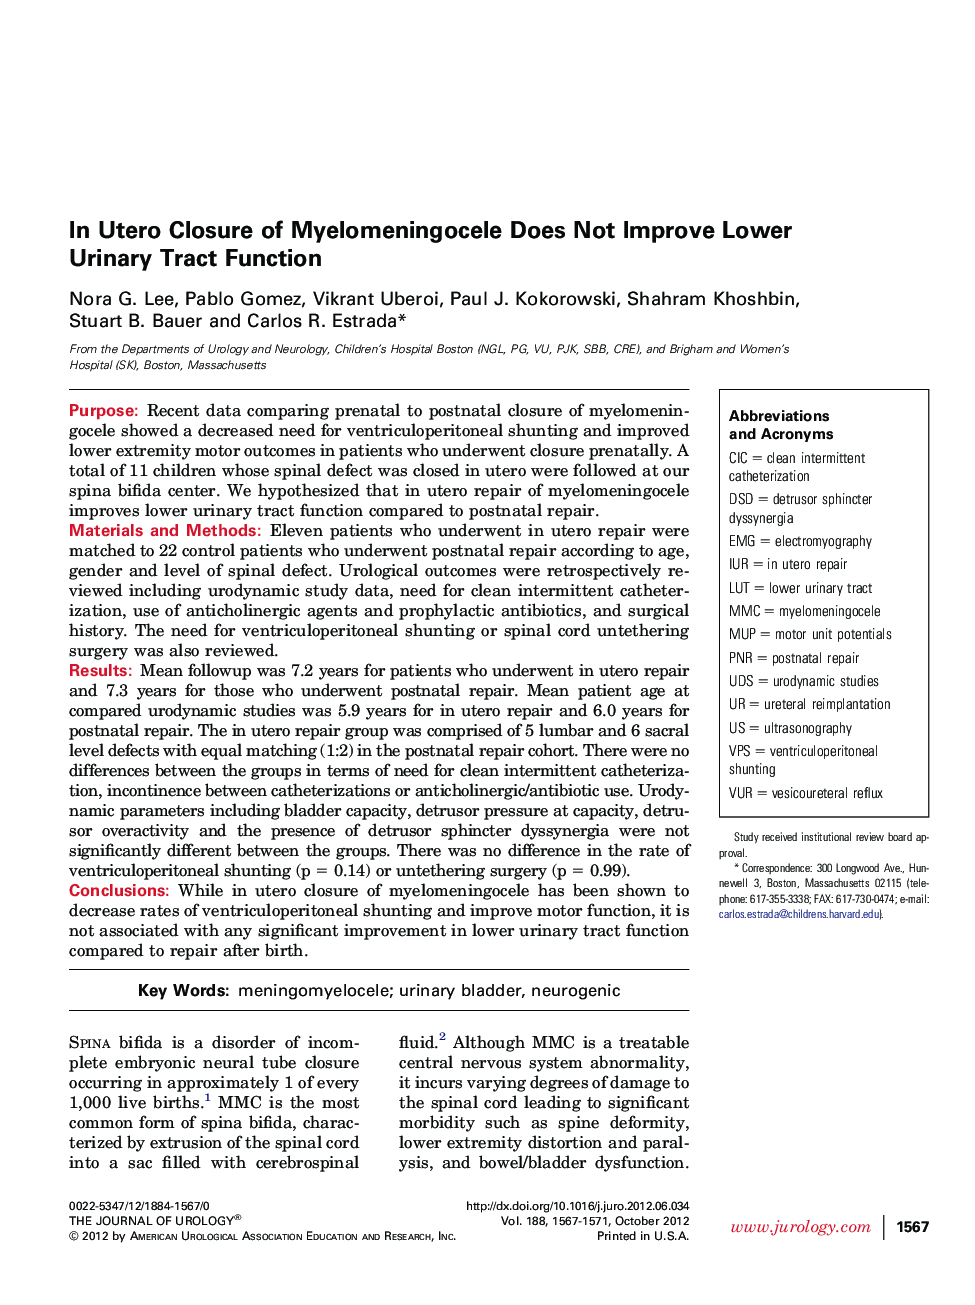 In Utero Closure of Myelomeningocele Does Not Improve Lower Urinary Tract Function